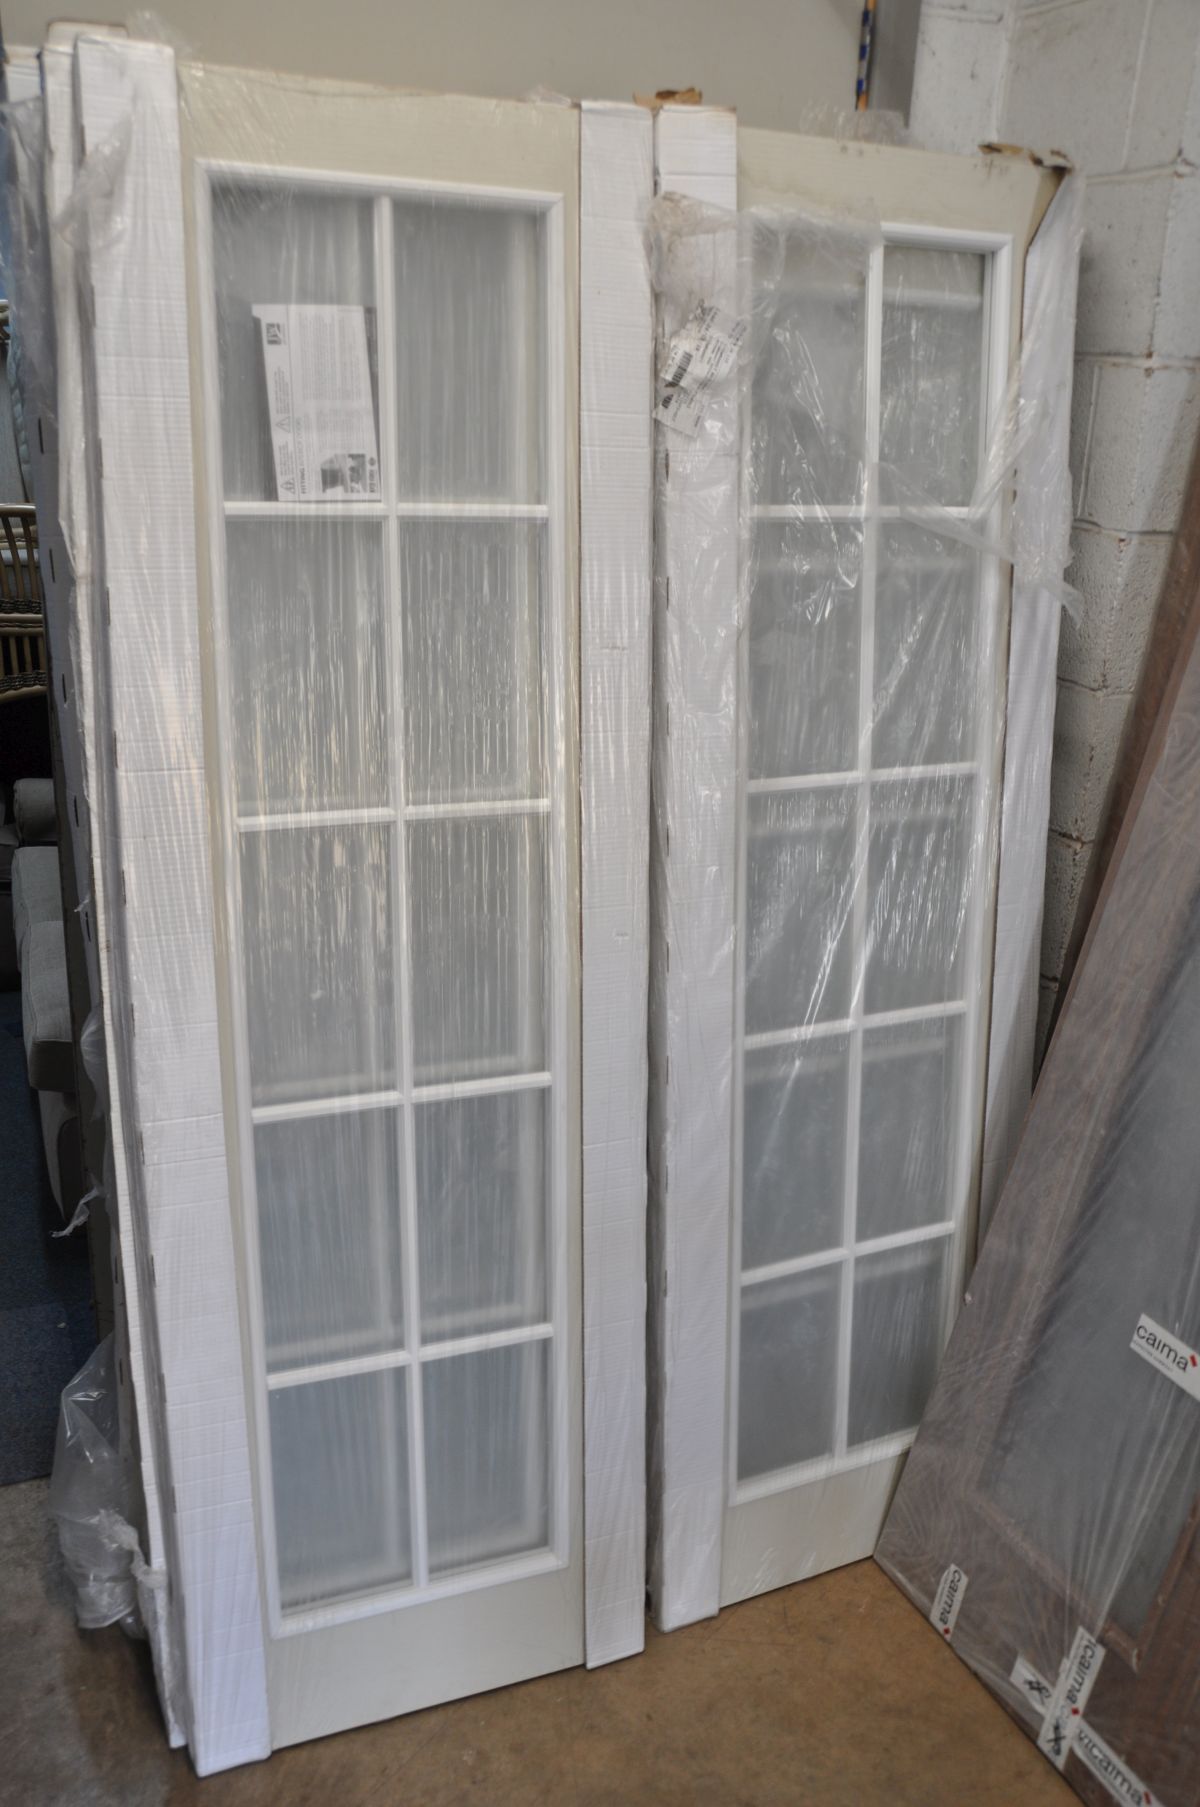 A COLLECTION OF FIFTEEN GLAZED PANEL EFFECT INTERIOR DOORS, width 61cm x height 198cm x depth 3.